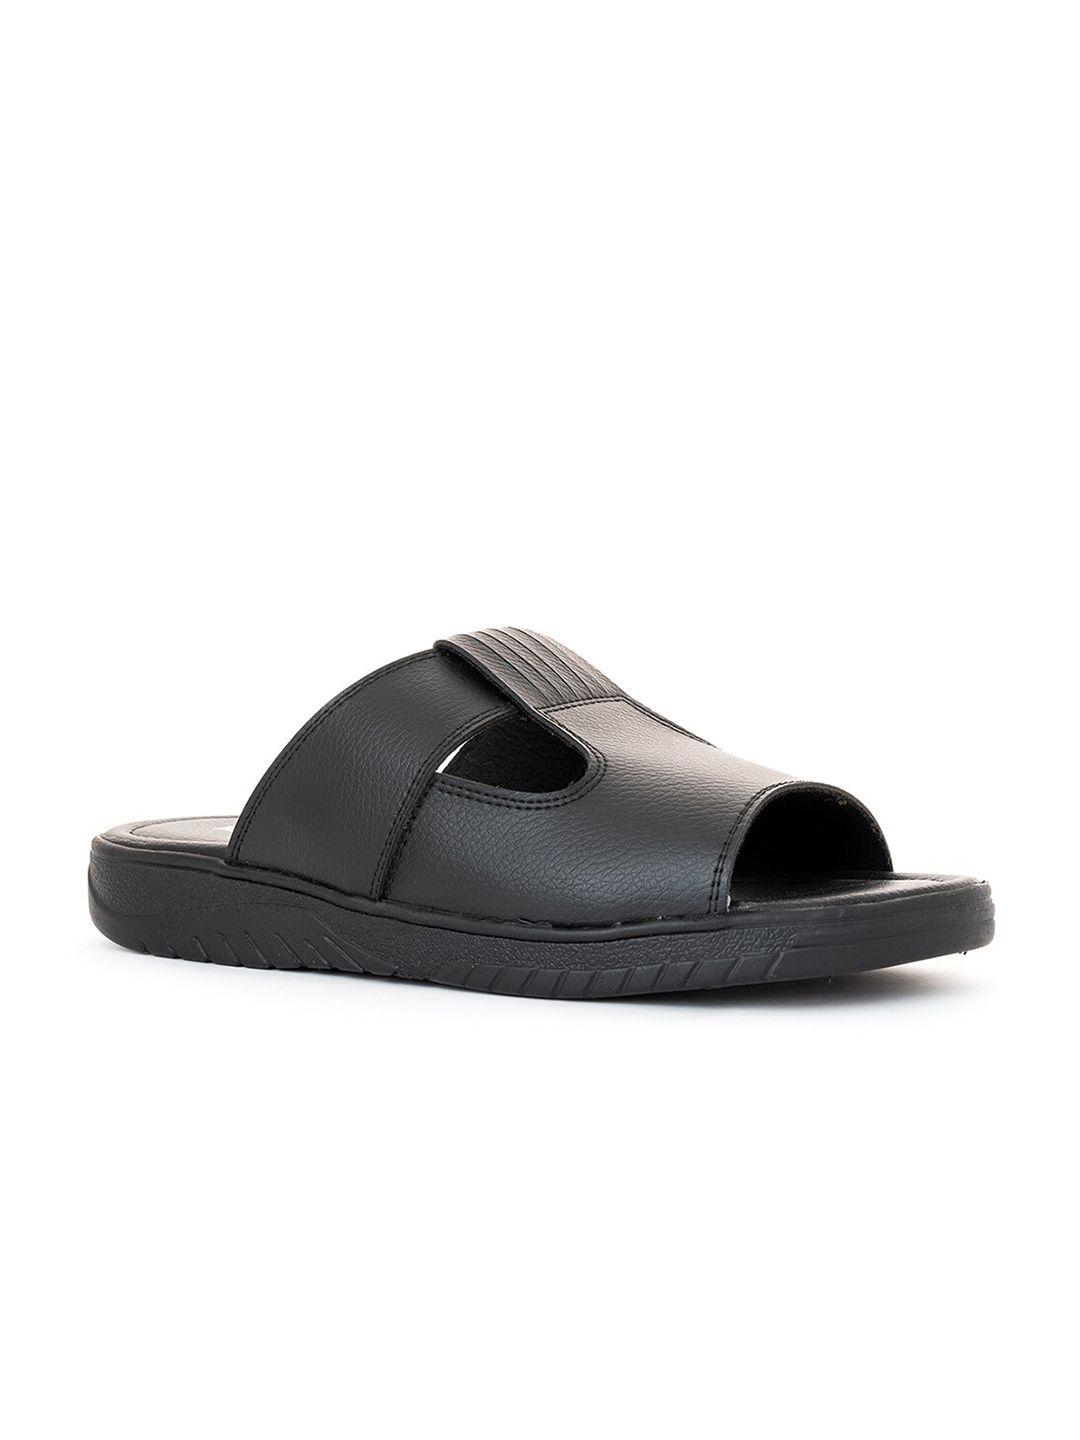 khadims men black & white comfort sandals